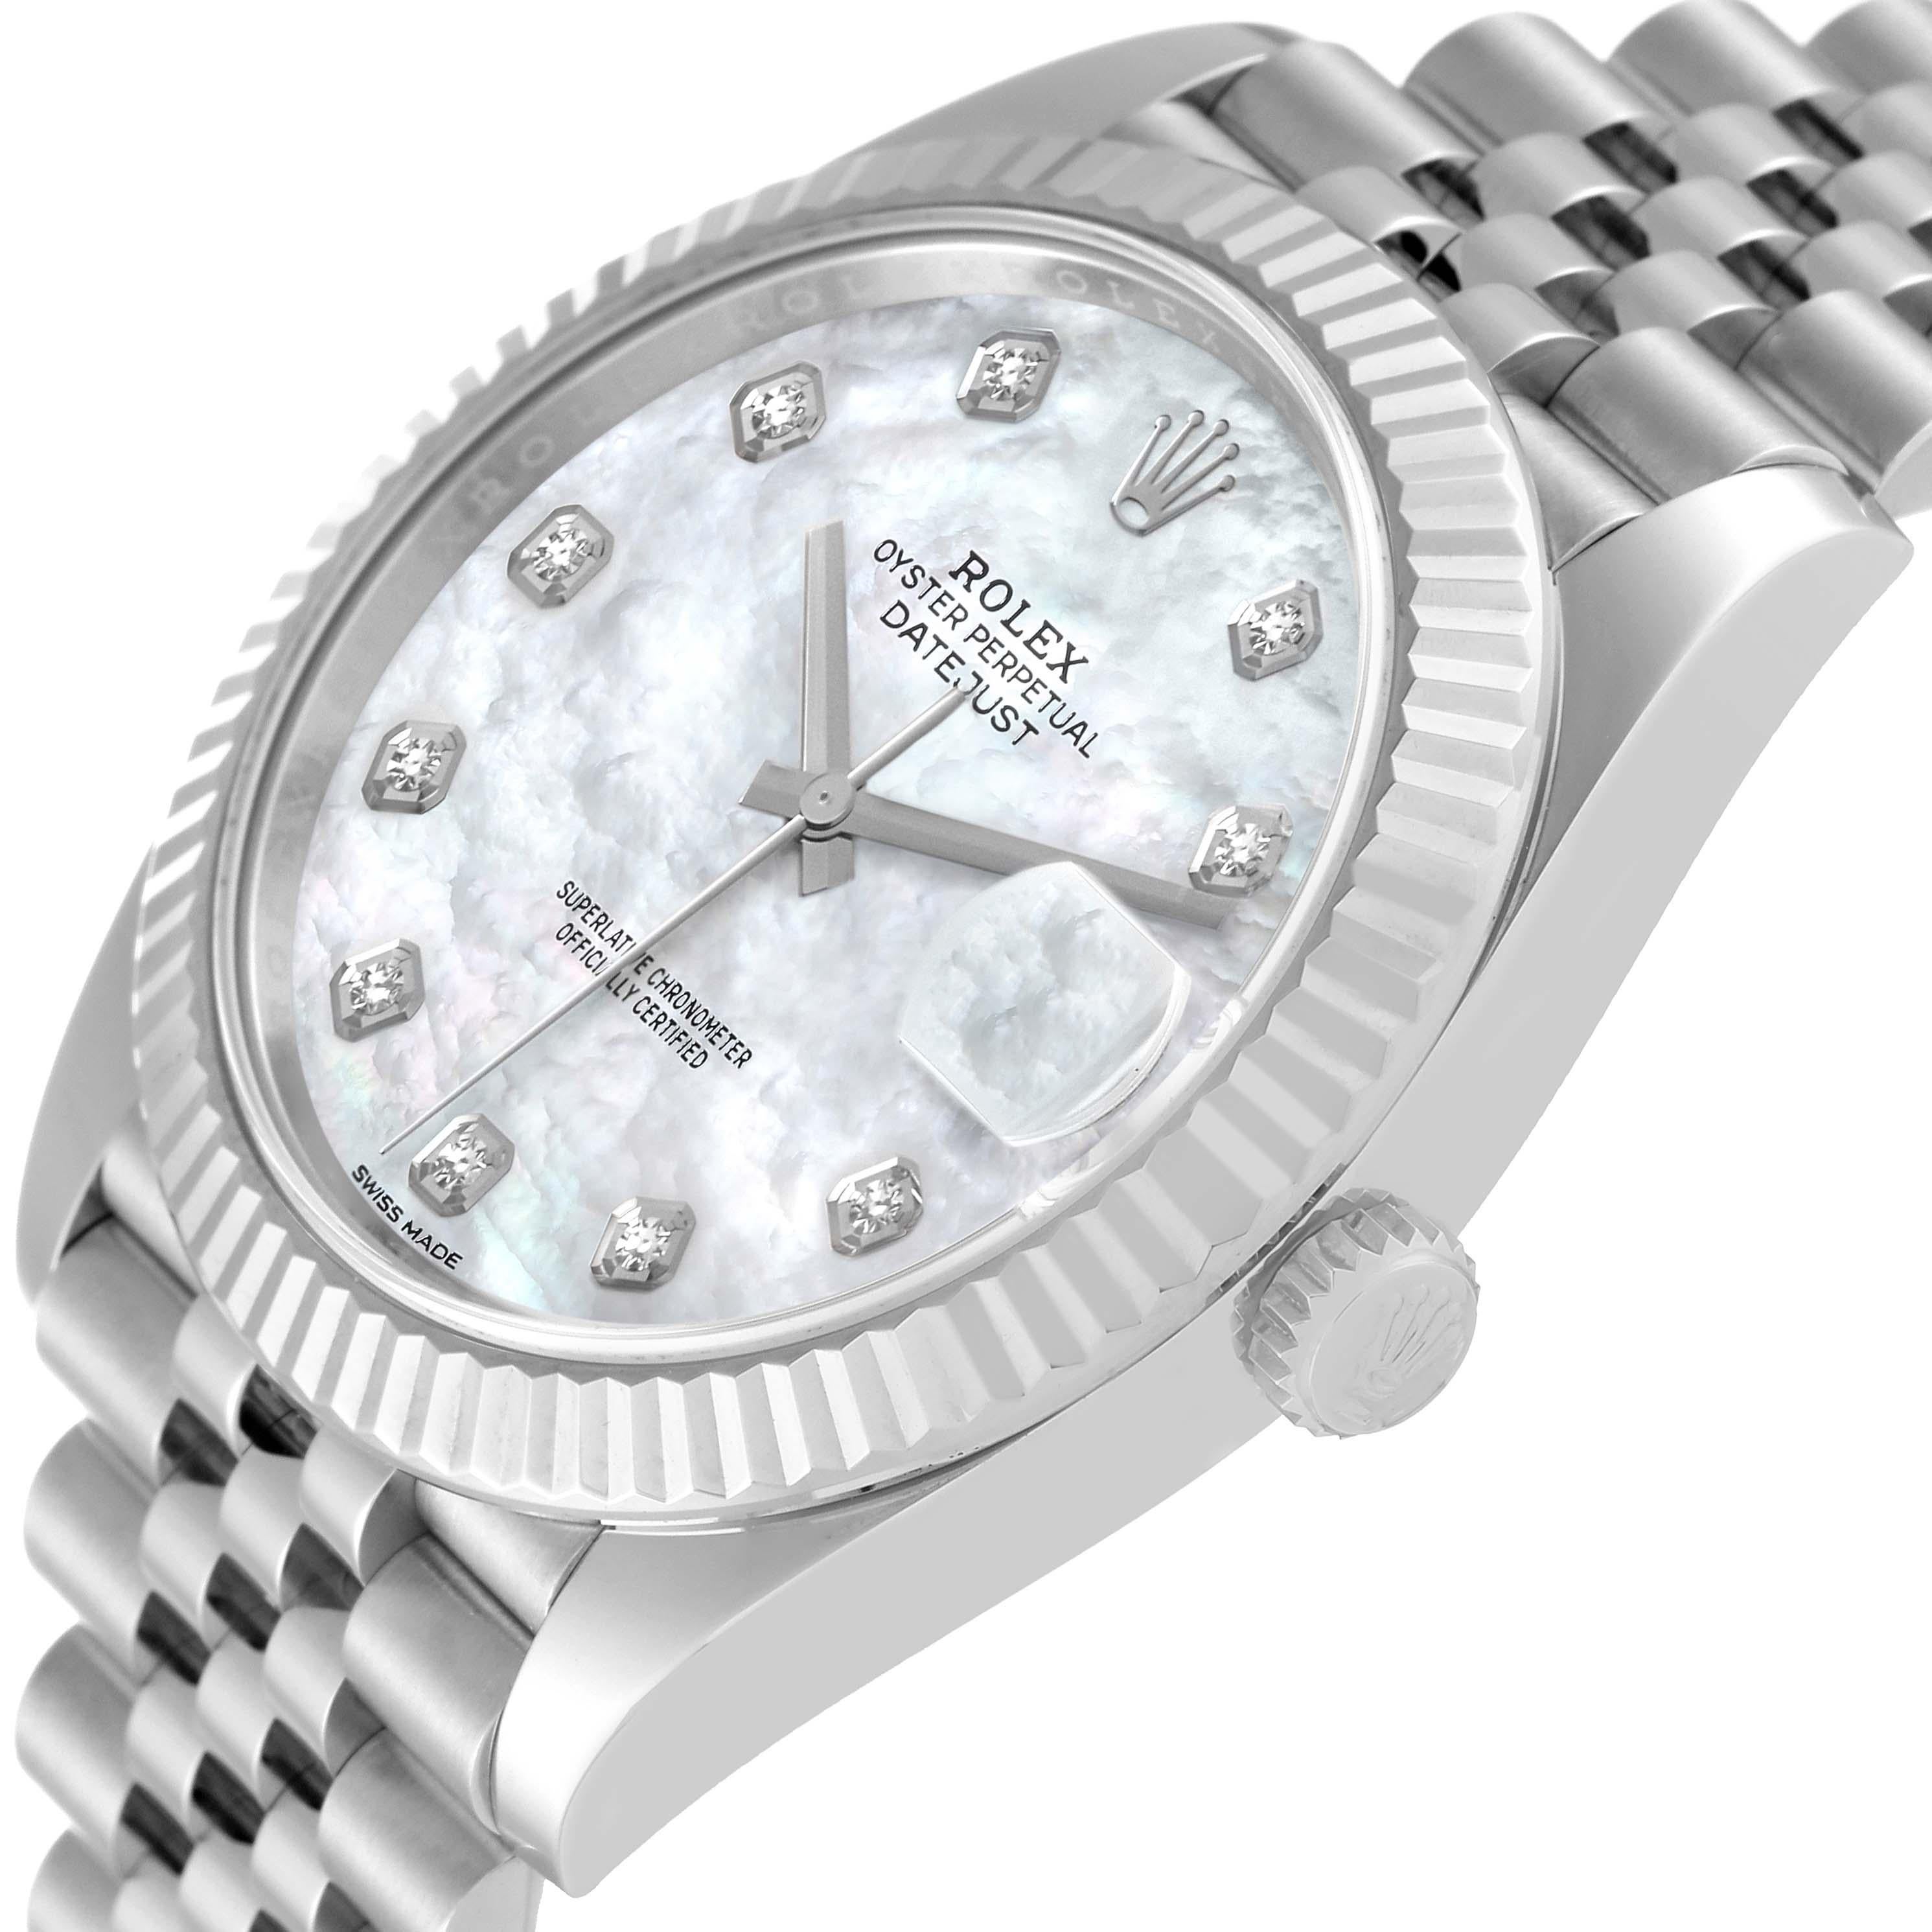 Men's Rolex Datejust 41 Steel White Gold MOP Diamond Dial Mens Watch 126334 Box Card